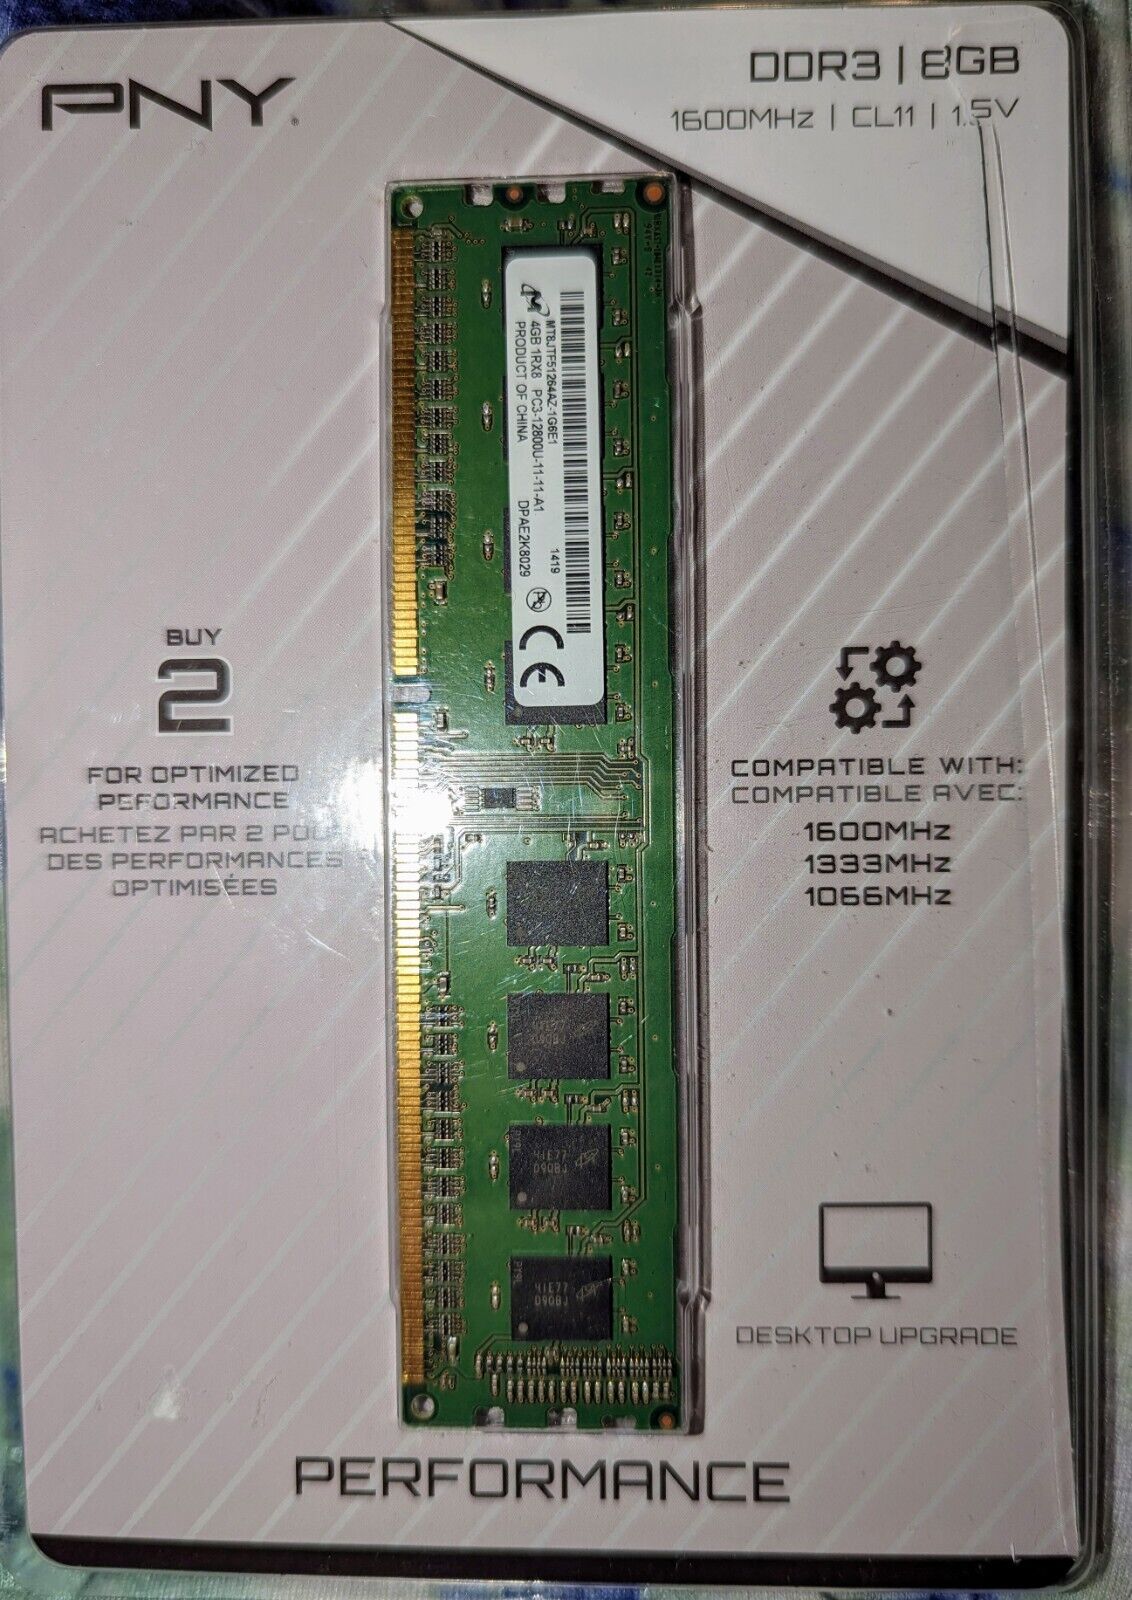 PNY - 8GB 1.6 GHz DDR3 DIMM Desktop Memory - Green New Old Stock in Original Pkg